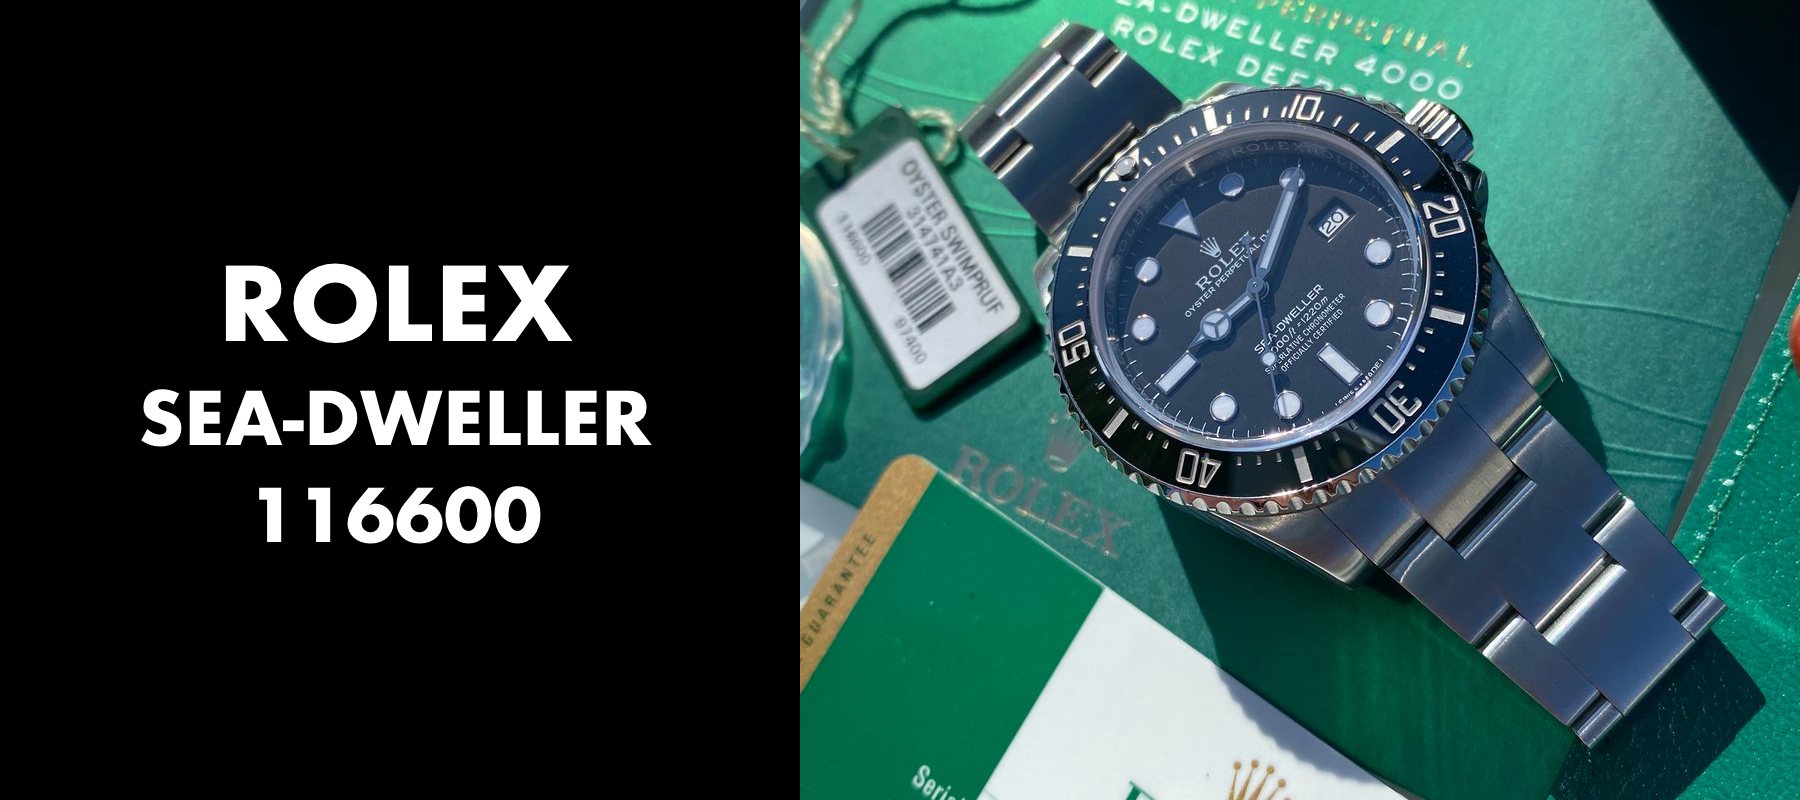 Rolex Sea-Dweller 116600 SD4000 - History